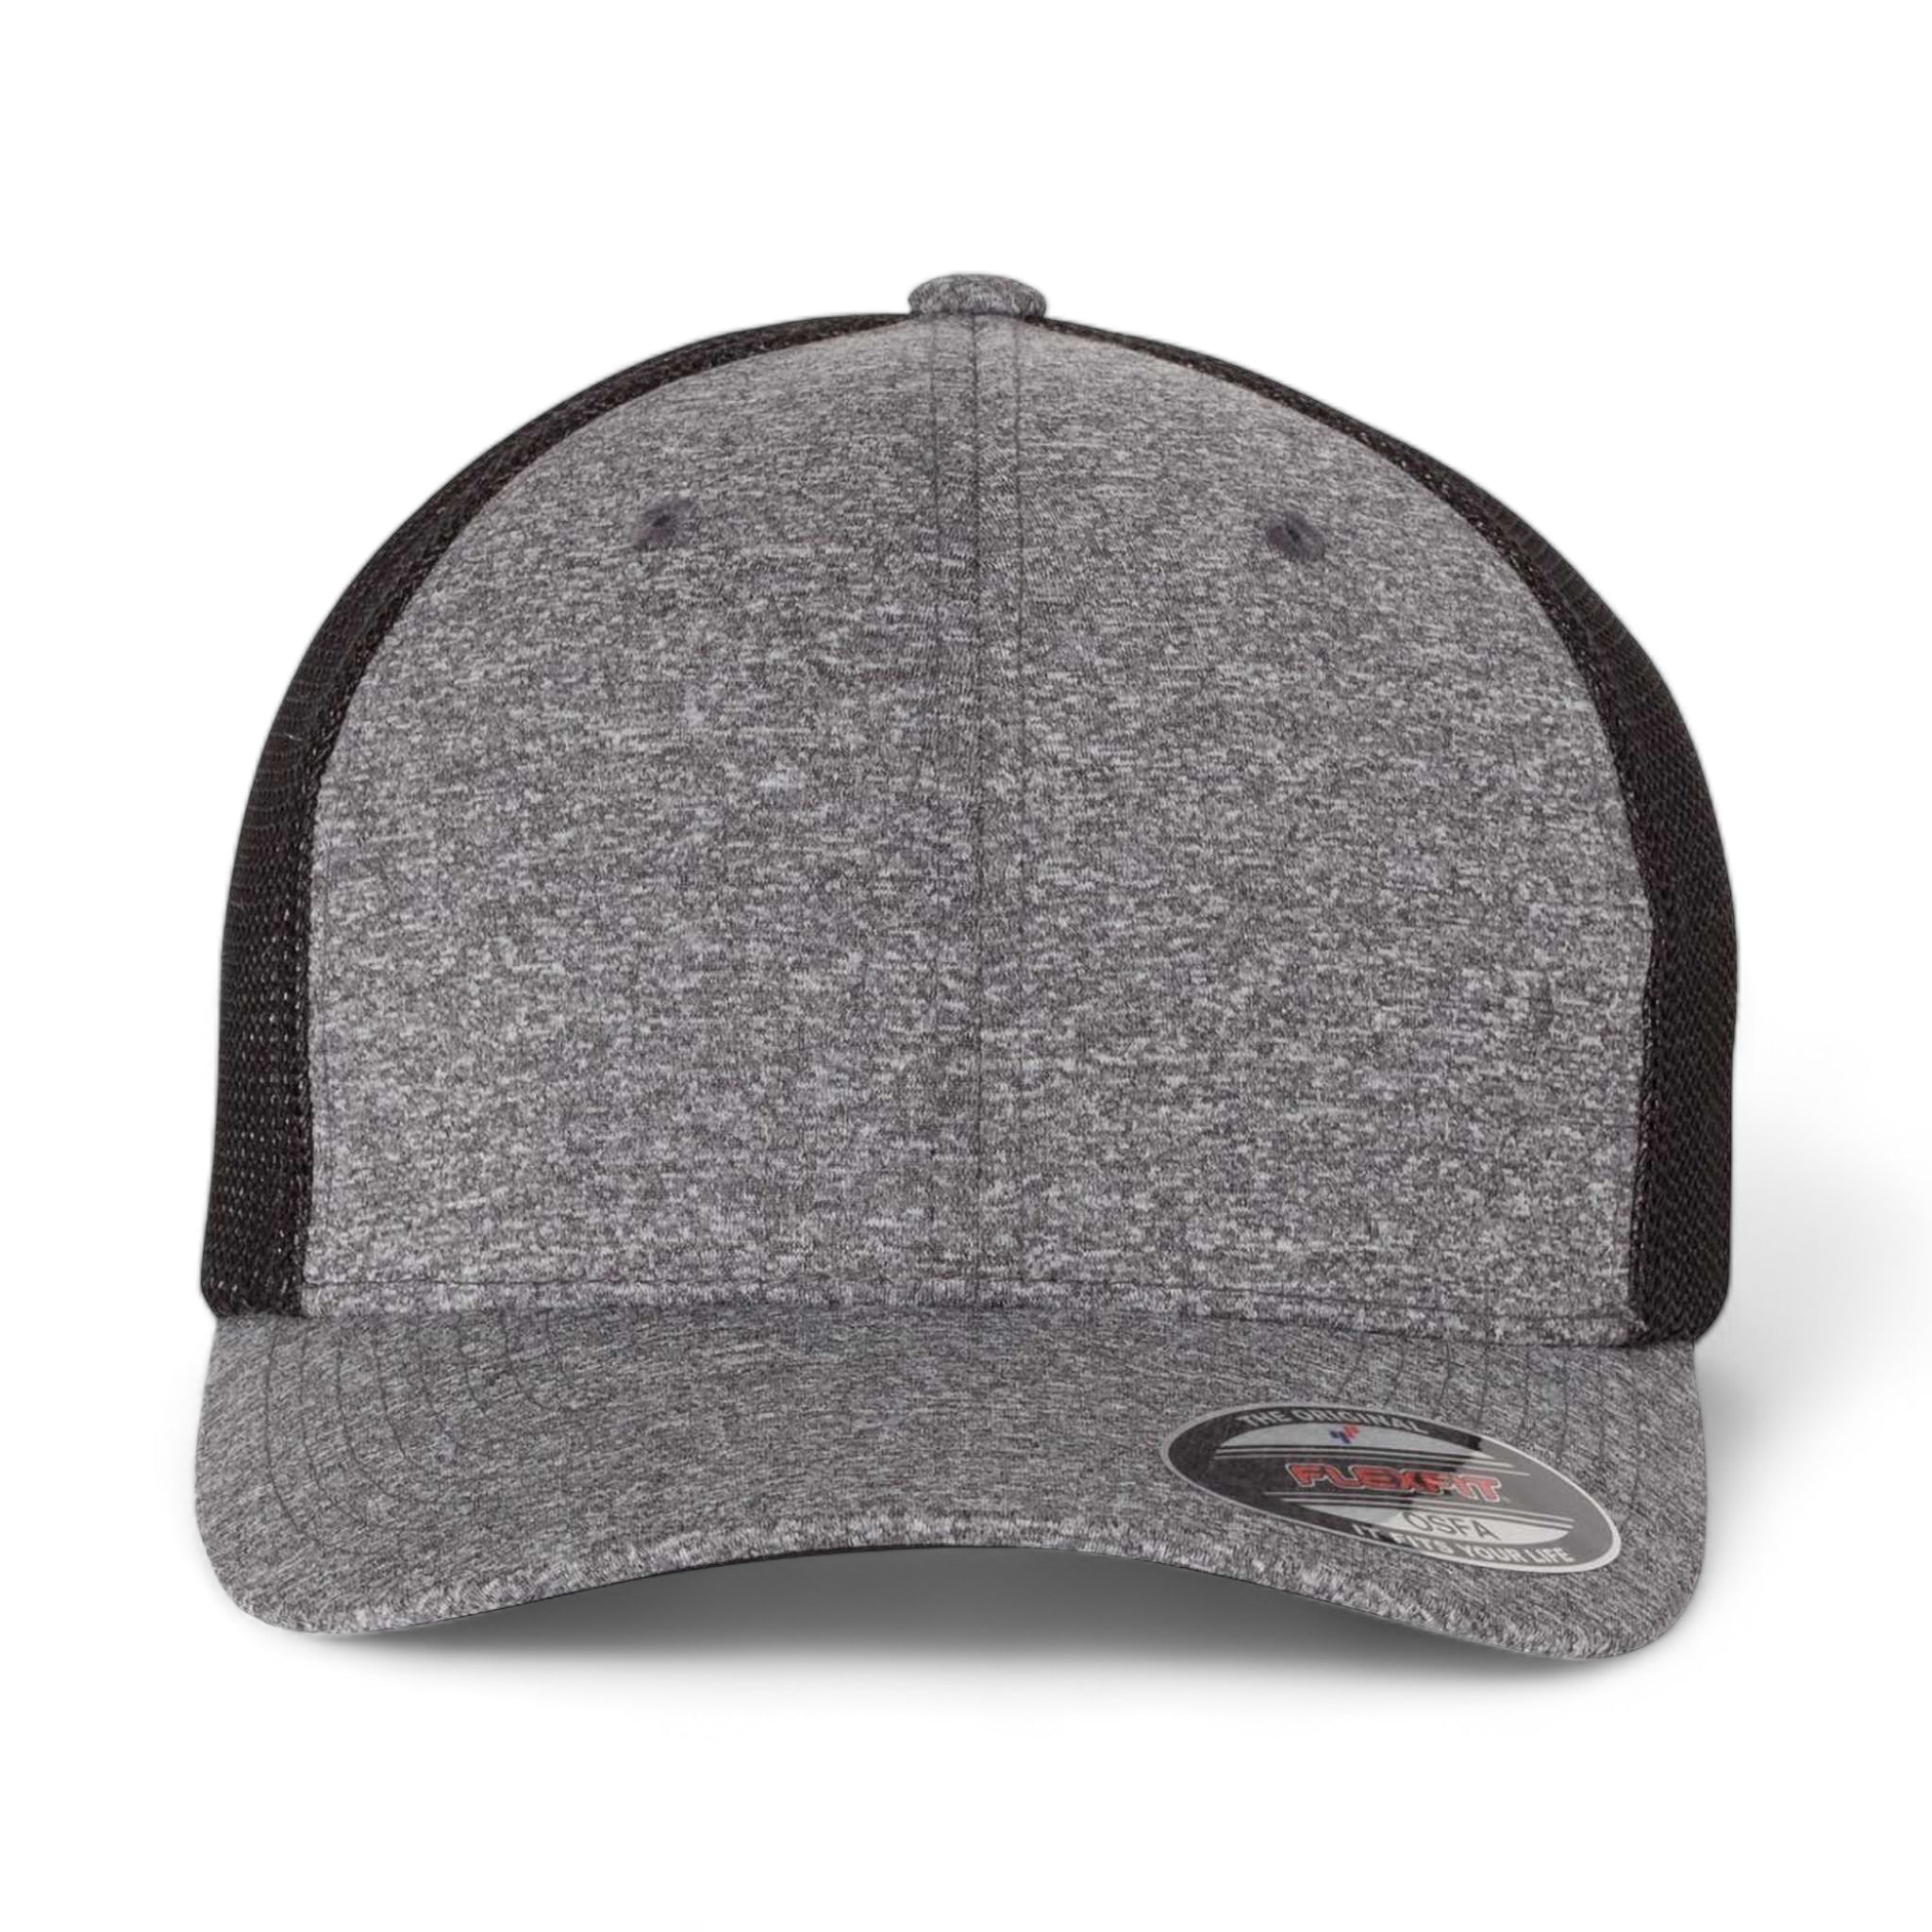 Front view of Flexfit 6311 custom hat in dark heather grey and black